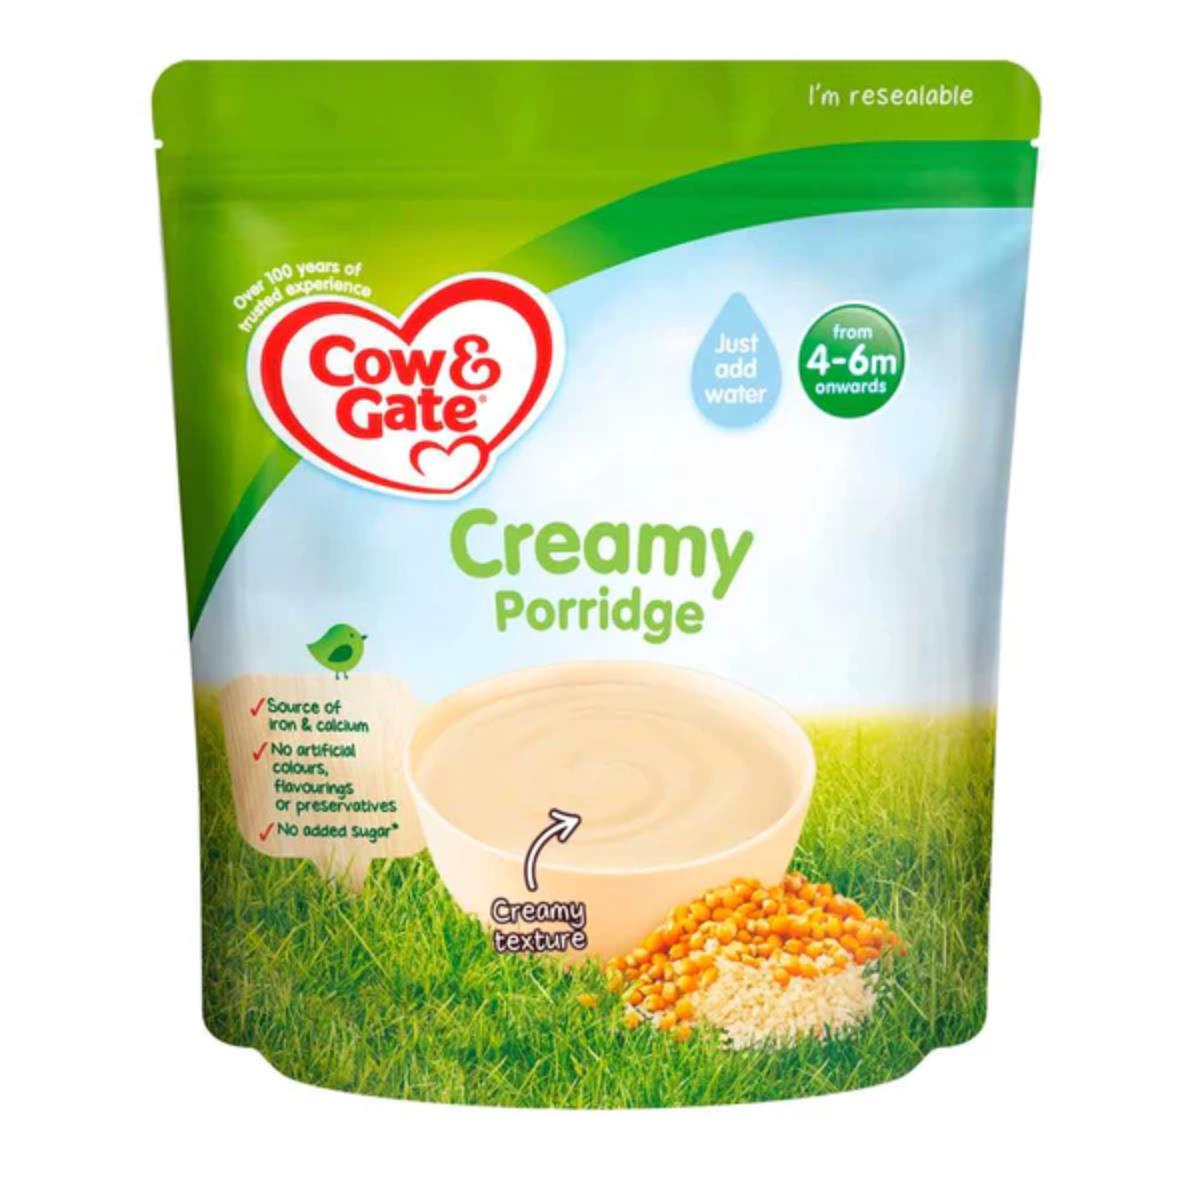 Cow & Gate Creamy Porridge (4-6m+) - 125g